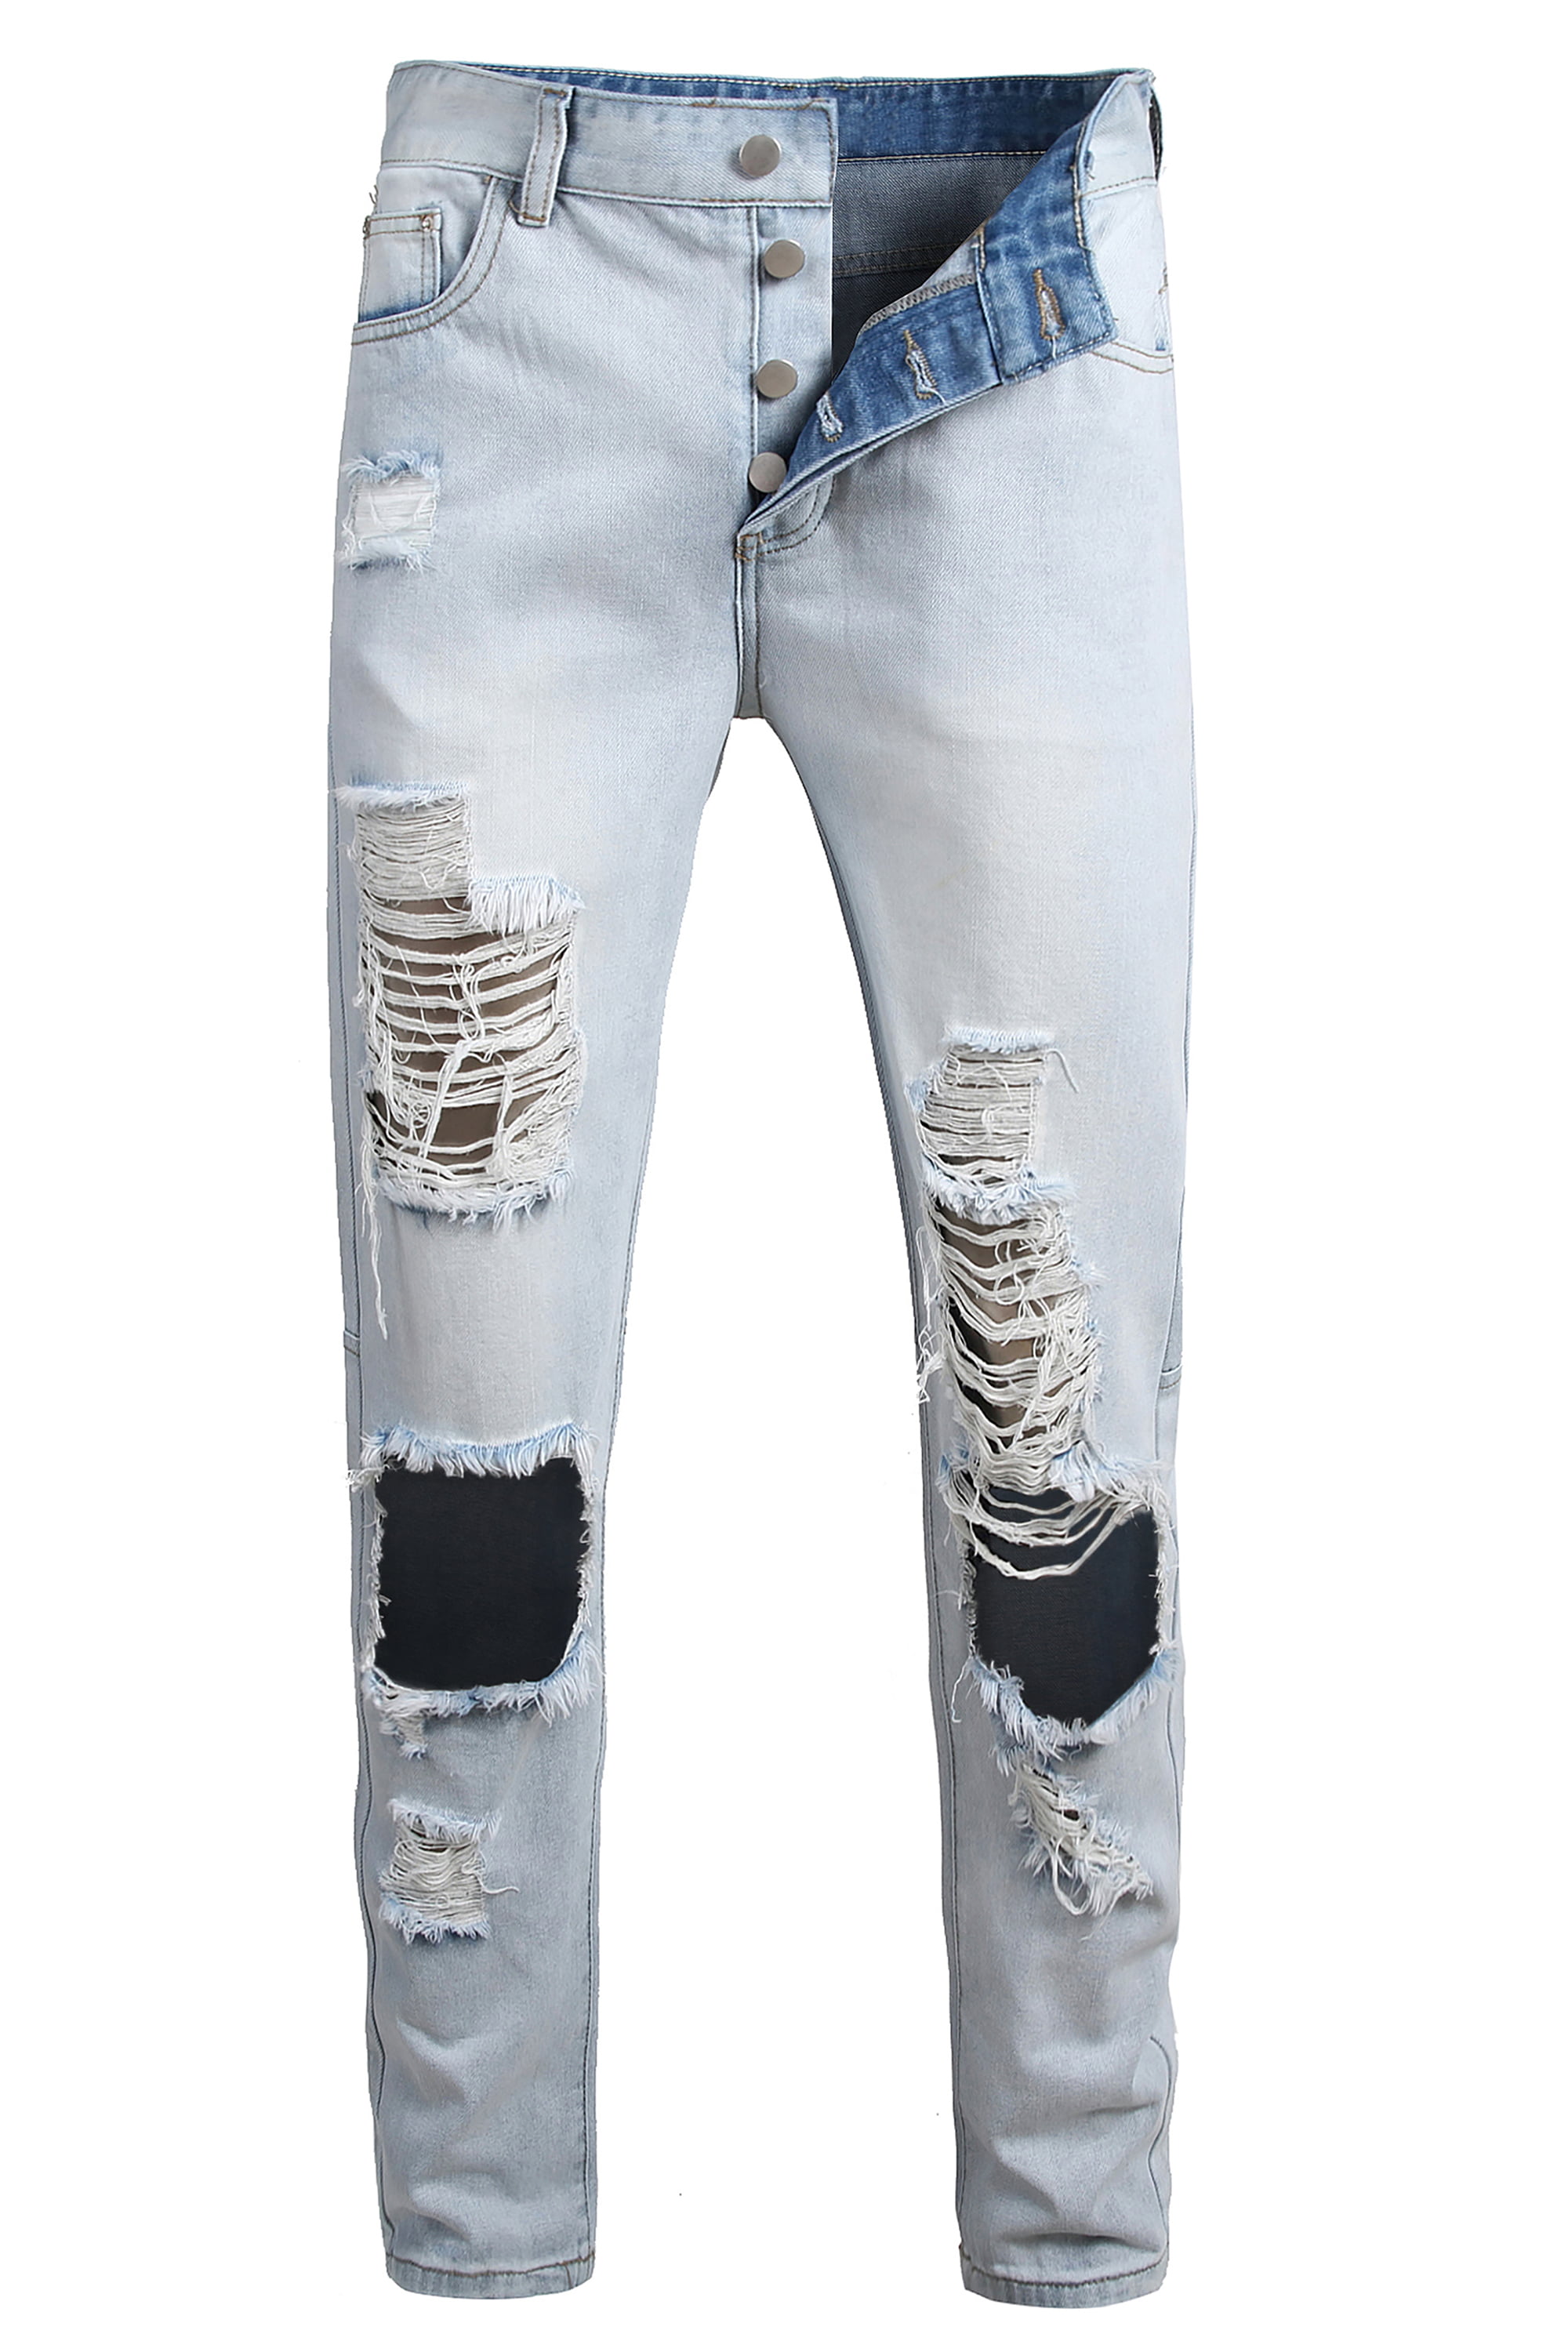 LZLER Men's Slim Fit Ripped Destroyed Fashion Buckle Jeans for Men ...